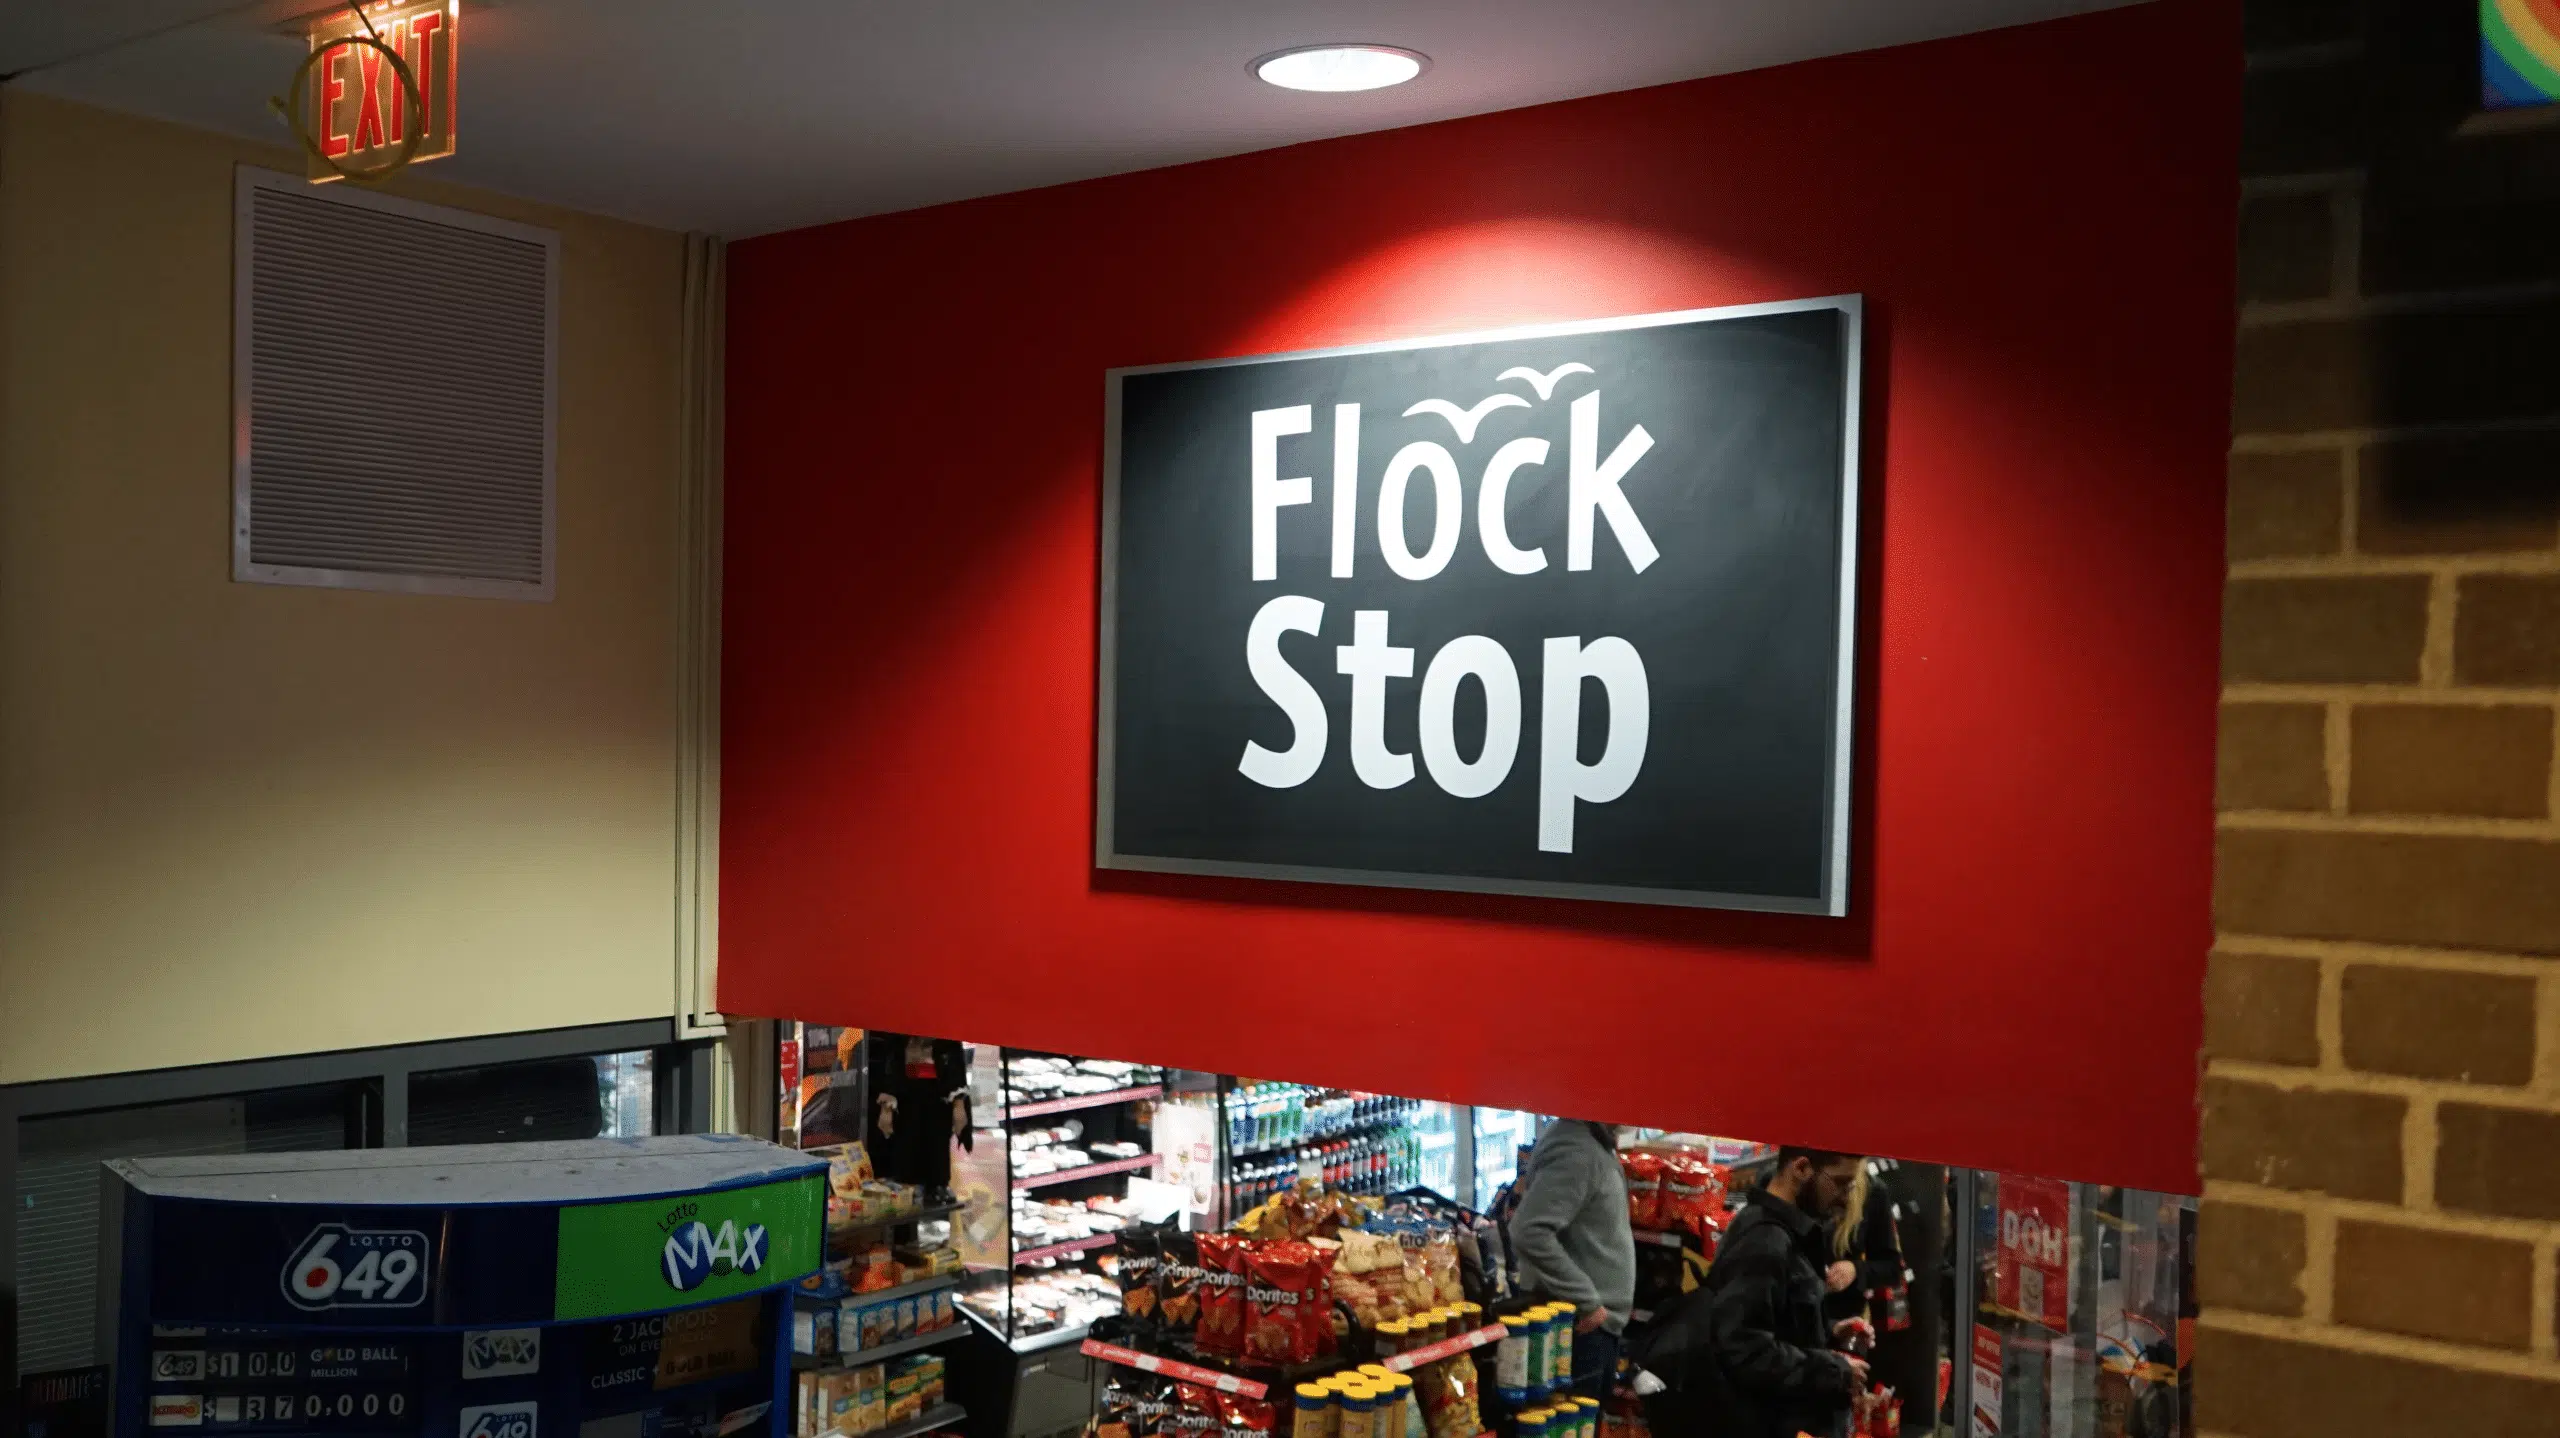 flock stop signage and entrance slc